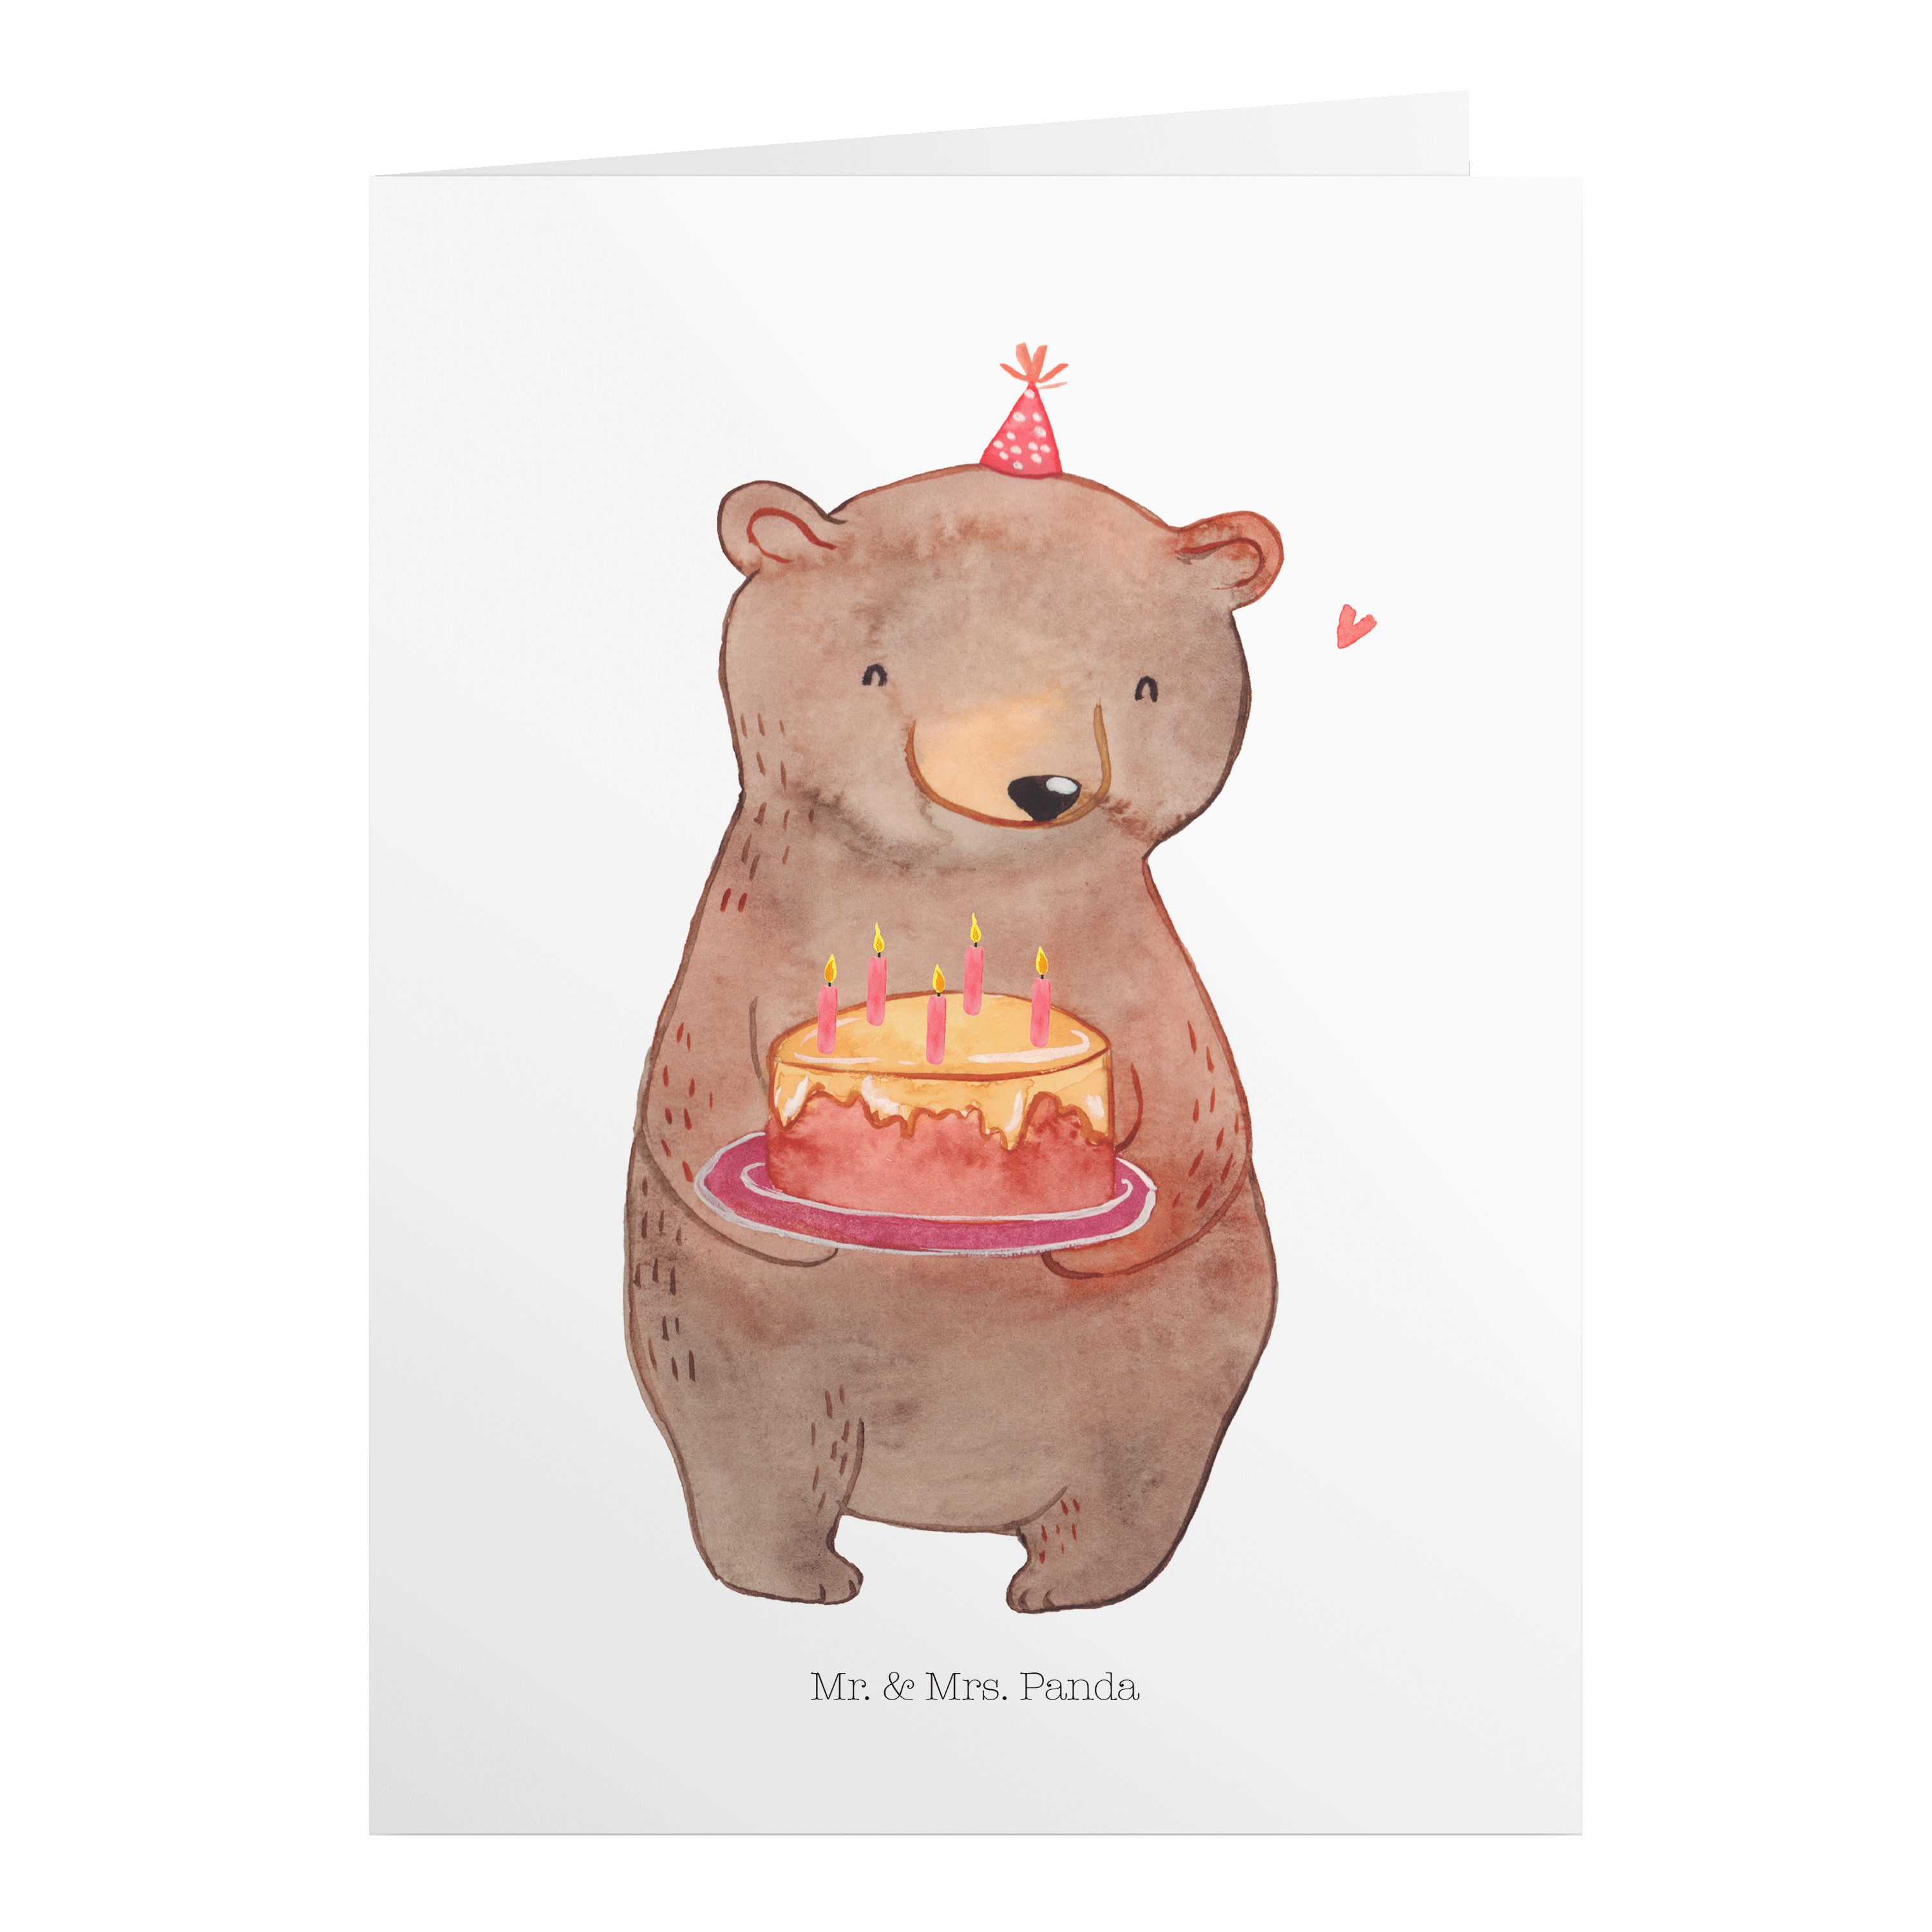 Mr. & Mrs. Panda Geburtstagskarten Bär Torte - Weiß - Geschenk, Geburtstagsgeschenk, Klappkarte, Kerzen